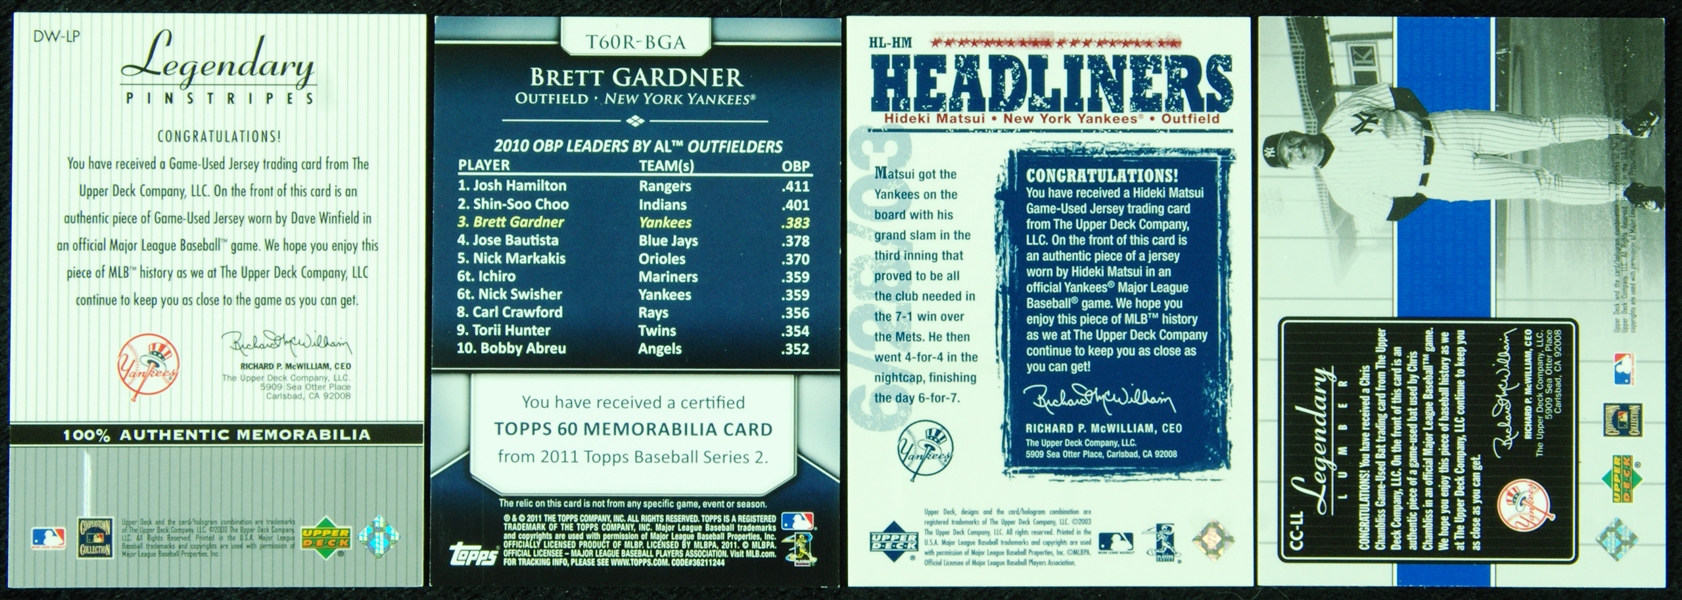 New York Yankees Uniform and Bat Cards (19)